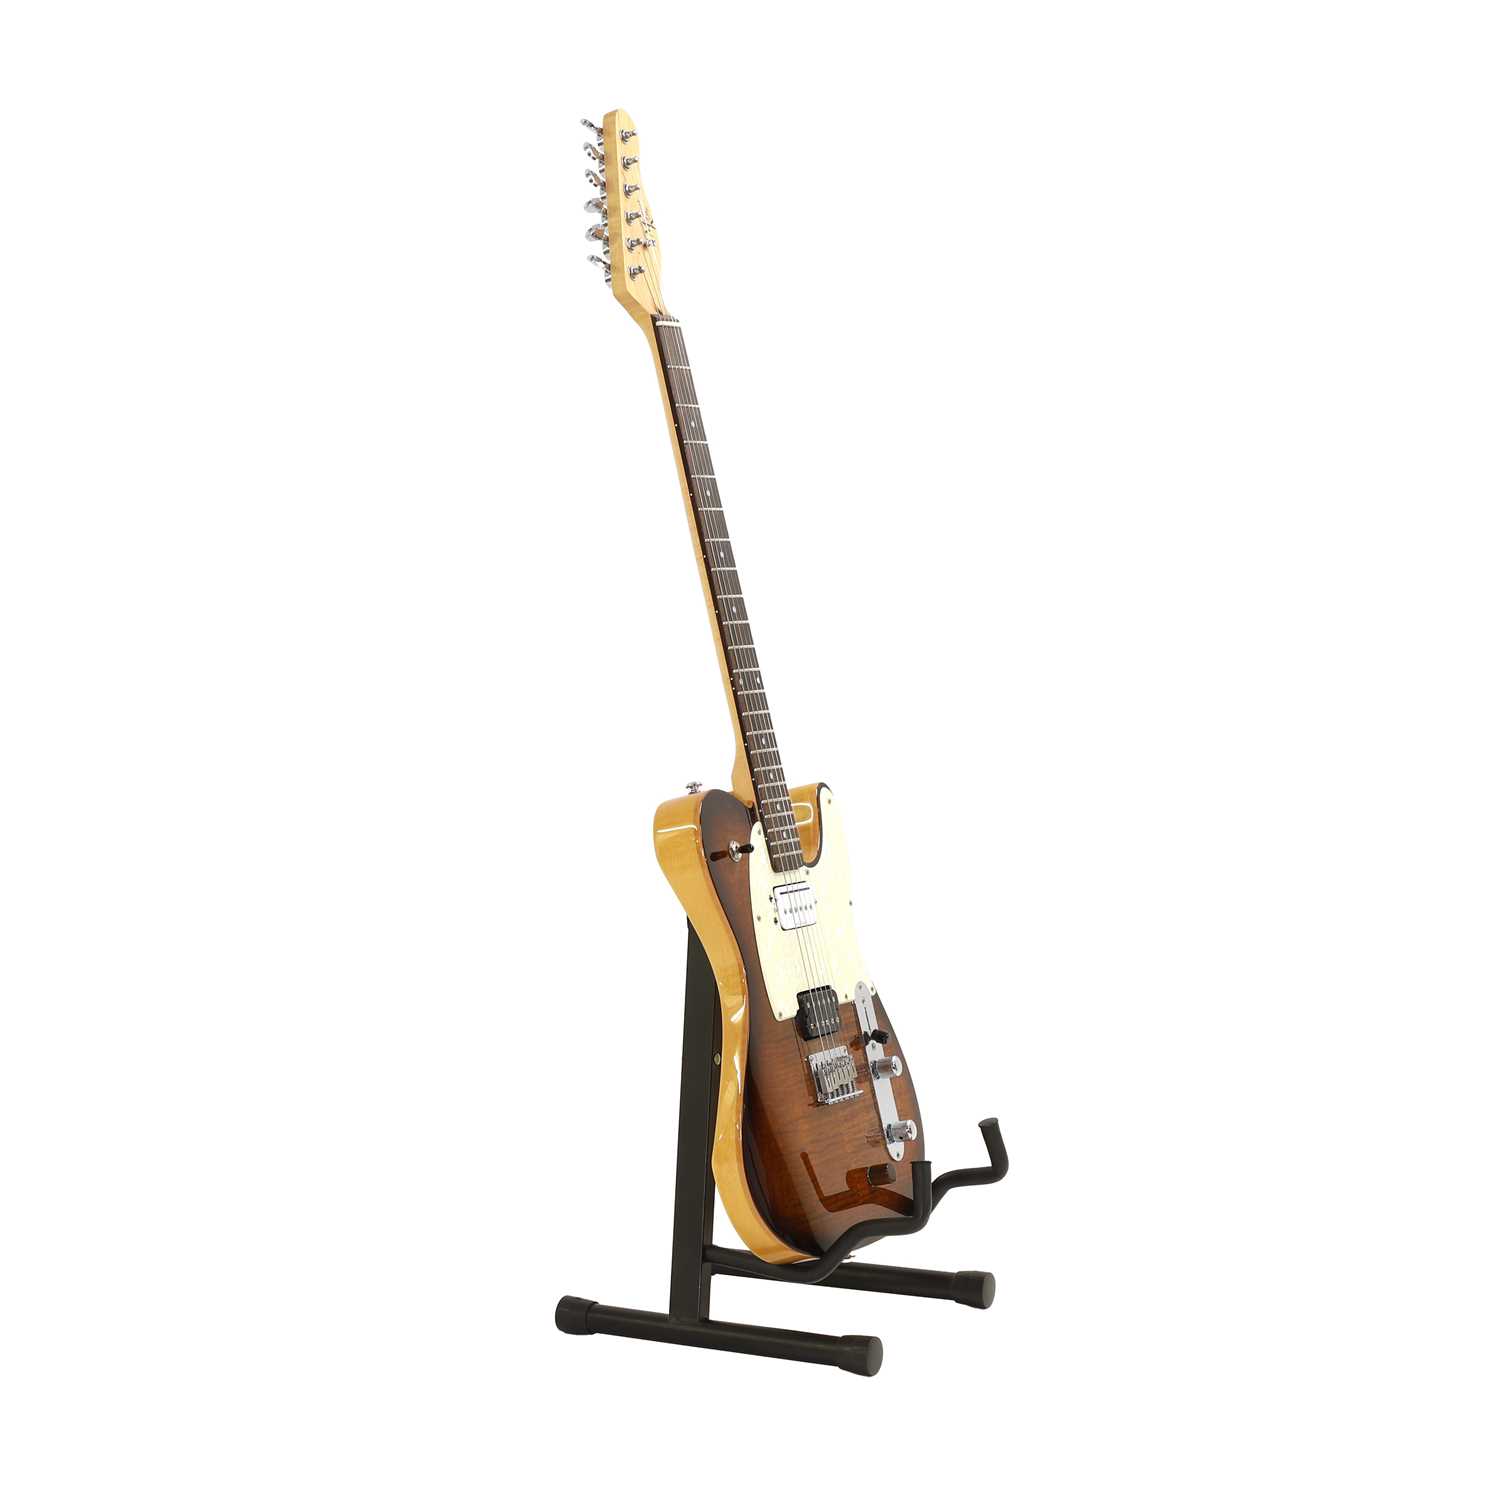 A Michael Kelly Robbie Gladwell custom hybrid electric guitar, - Image 5 of 13